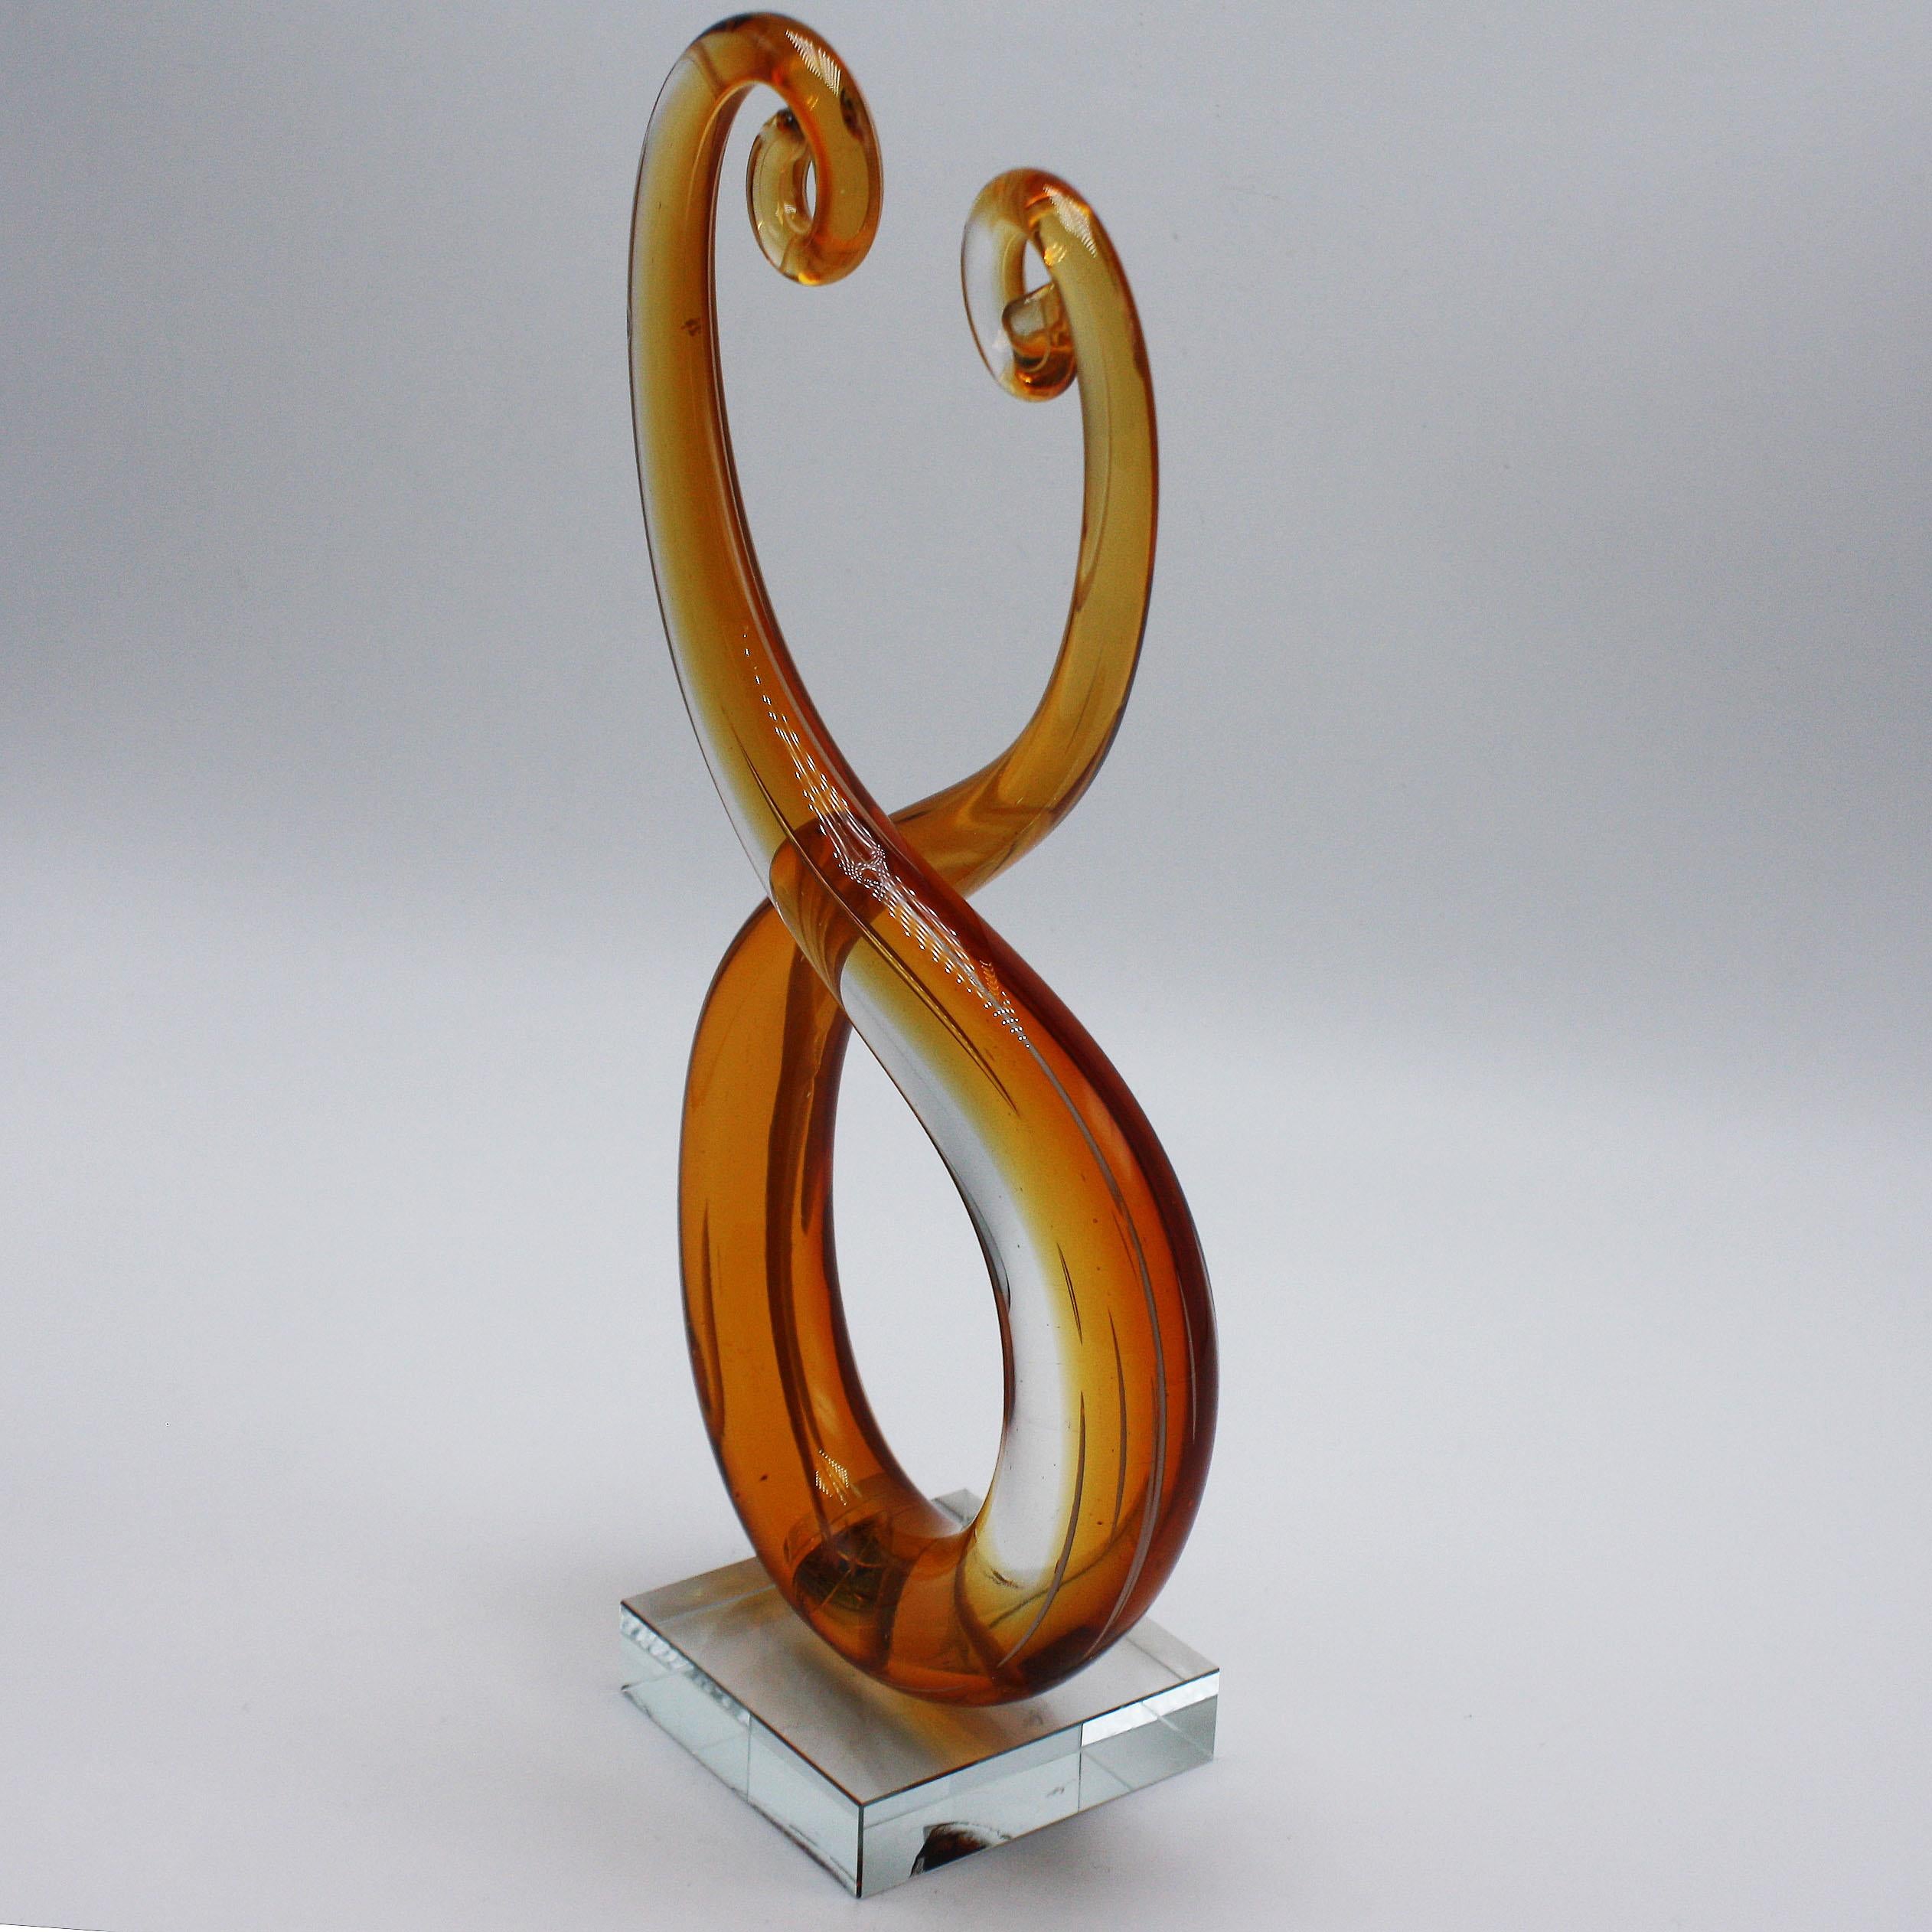 Amber Murano glass sculpture, circa 1970.
$625